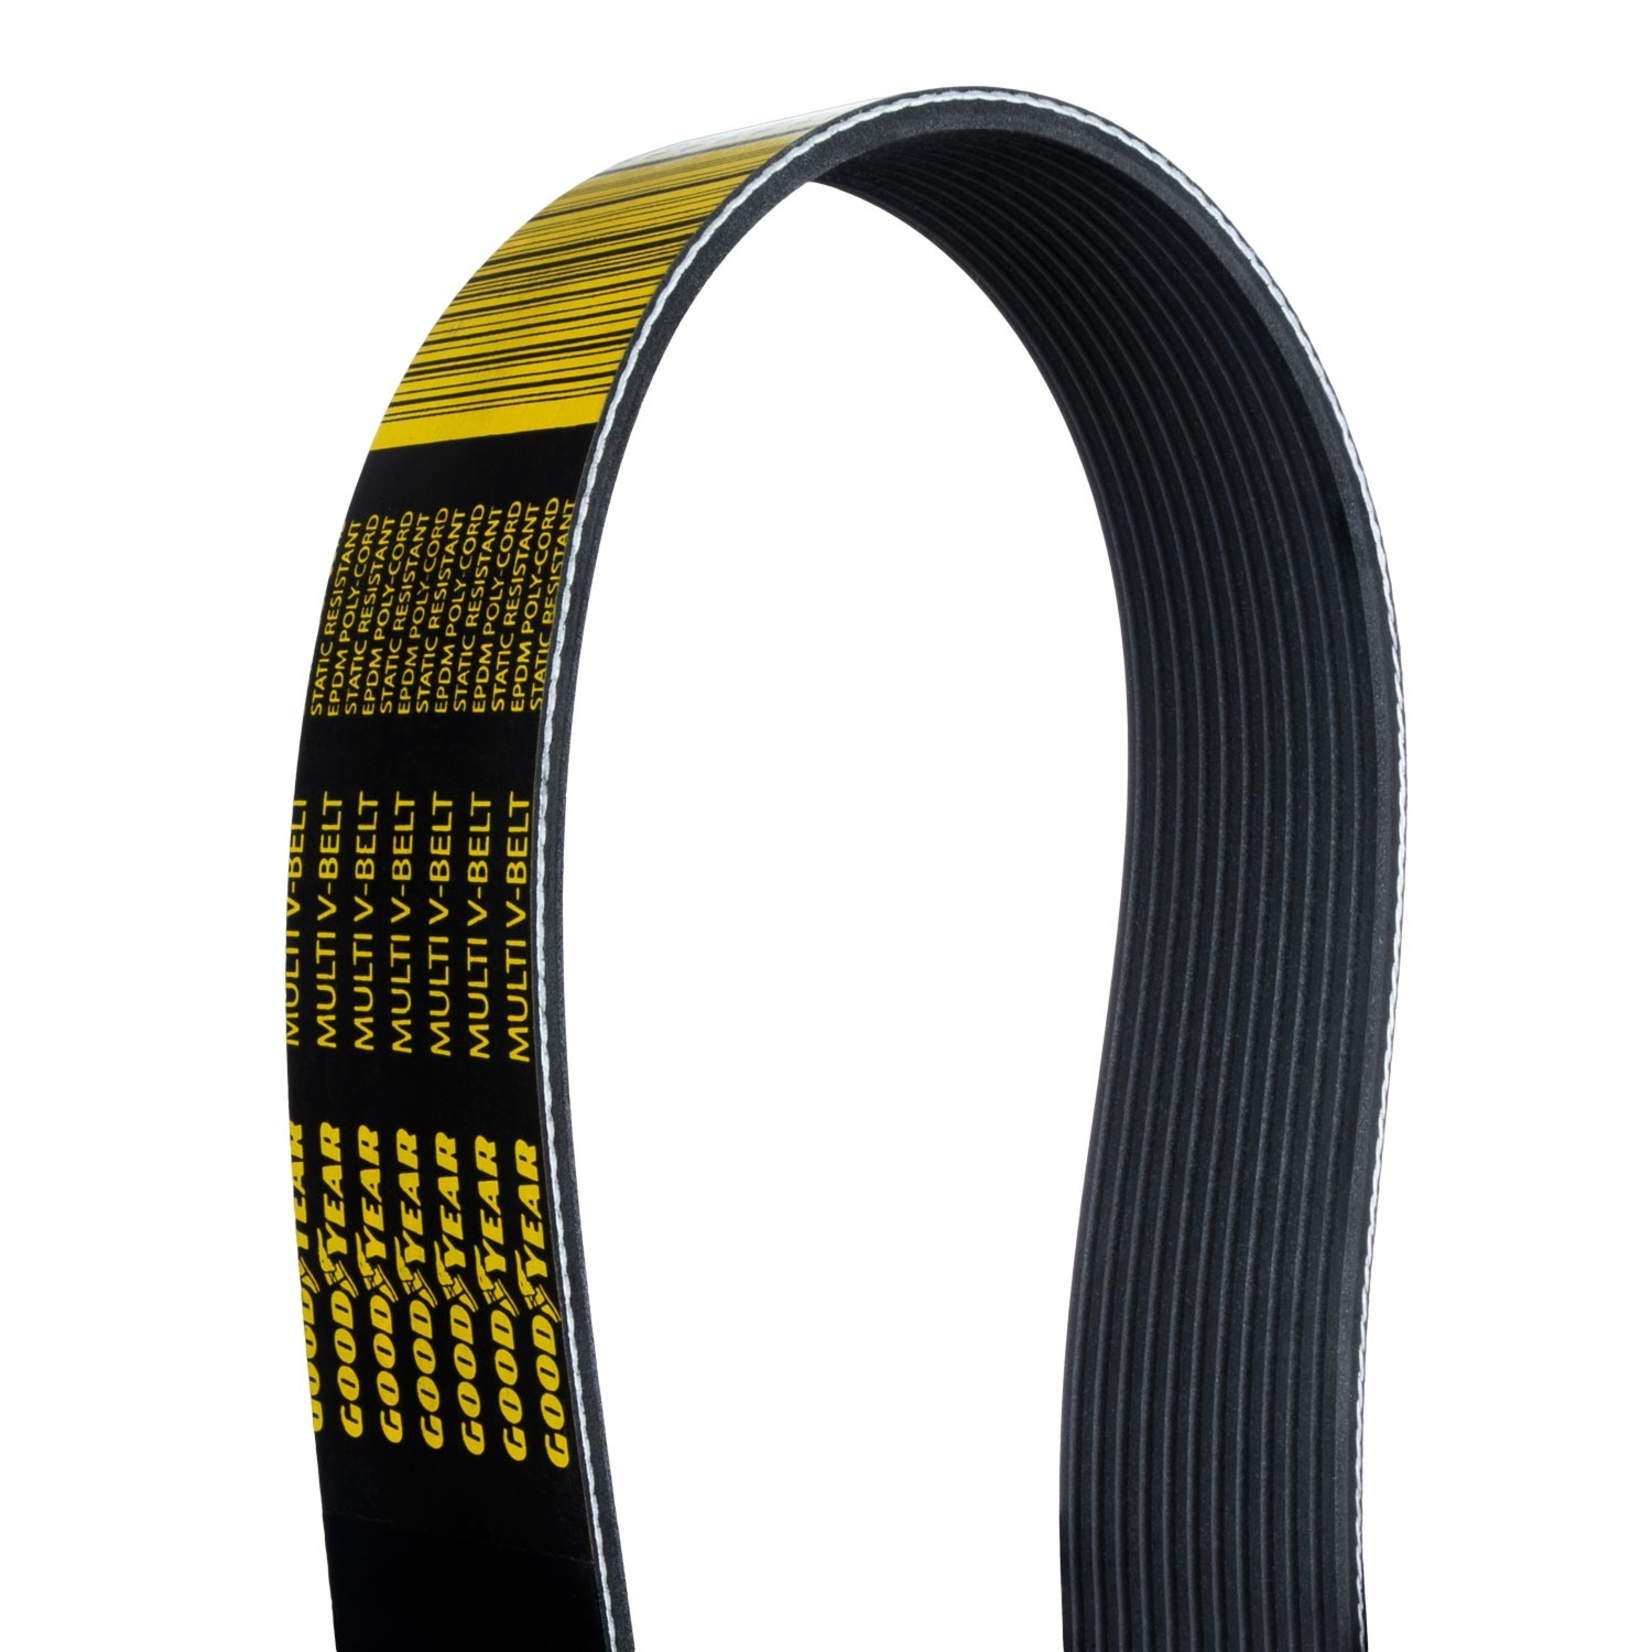 GoodYear Belt - Goodyear - Micro V-Belt / 86.4" Ref Goodyear 1120864